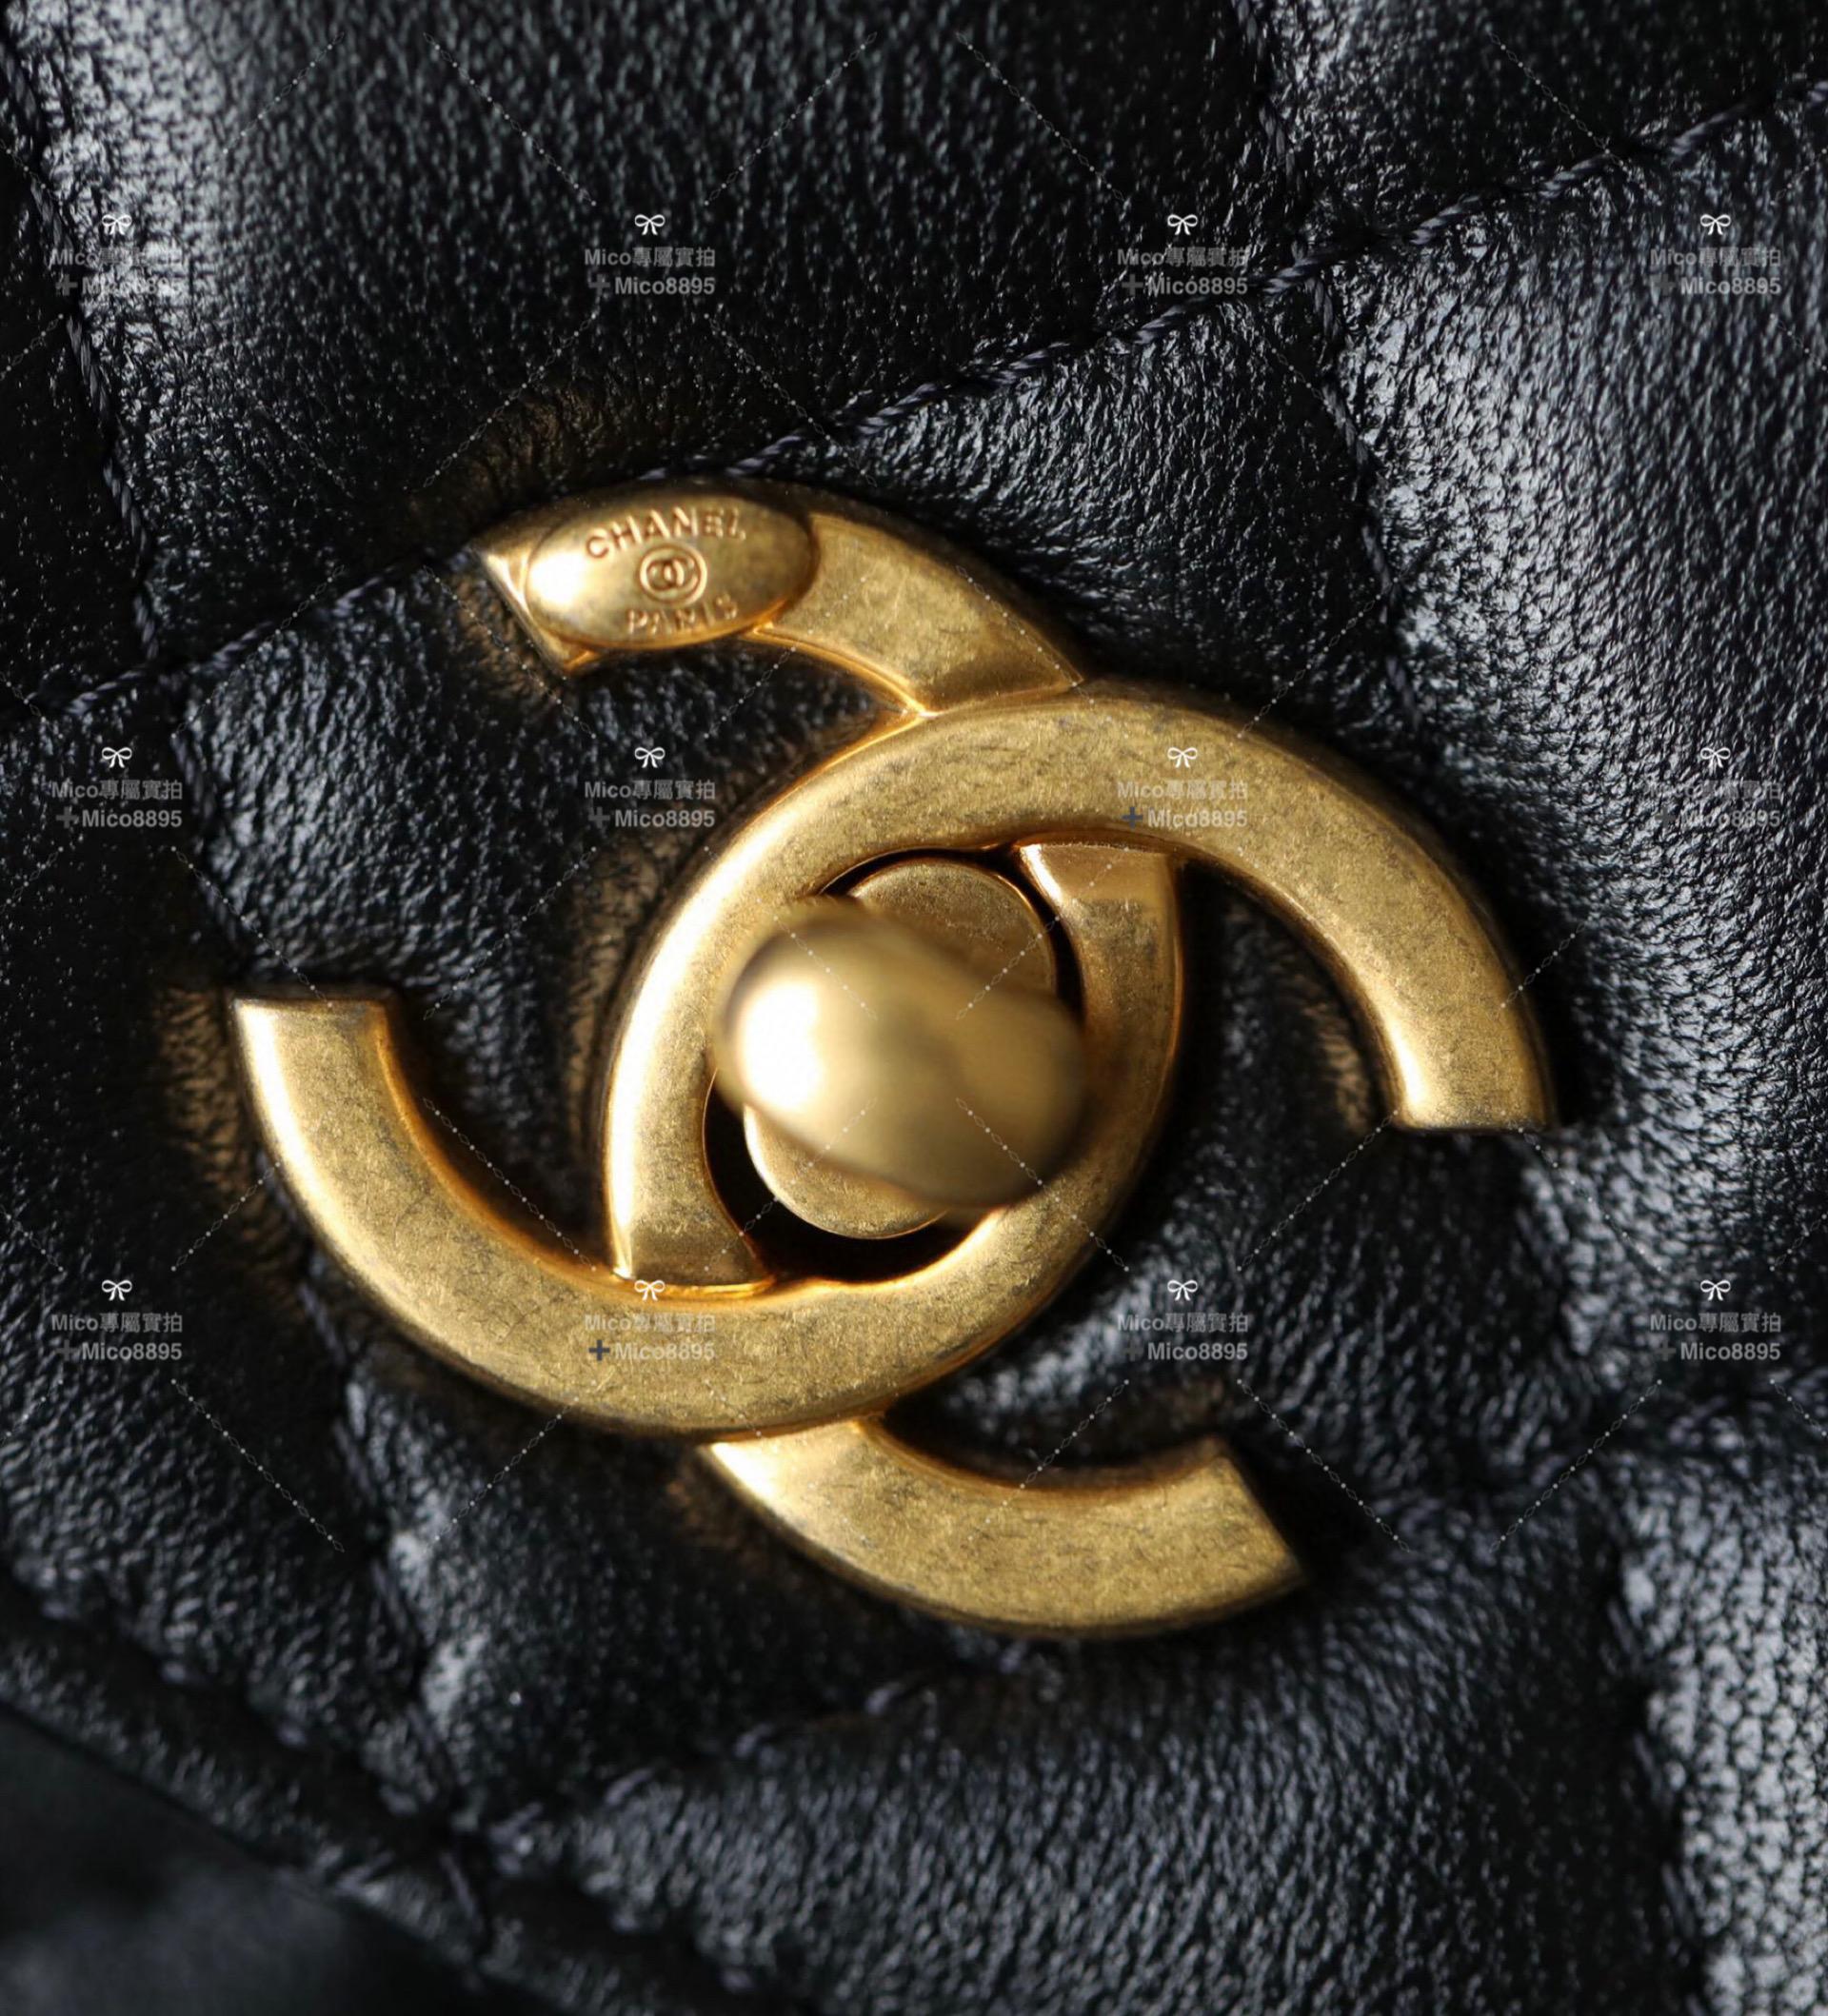 Chanel 金球系列 黑色小羊皮 WOC 斜挎錢包 19cm